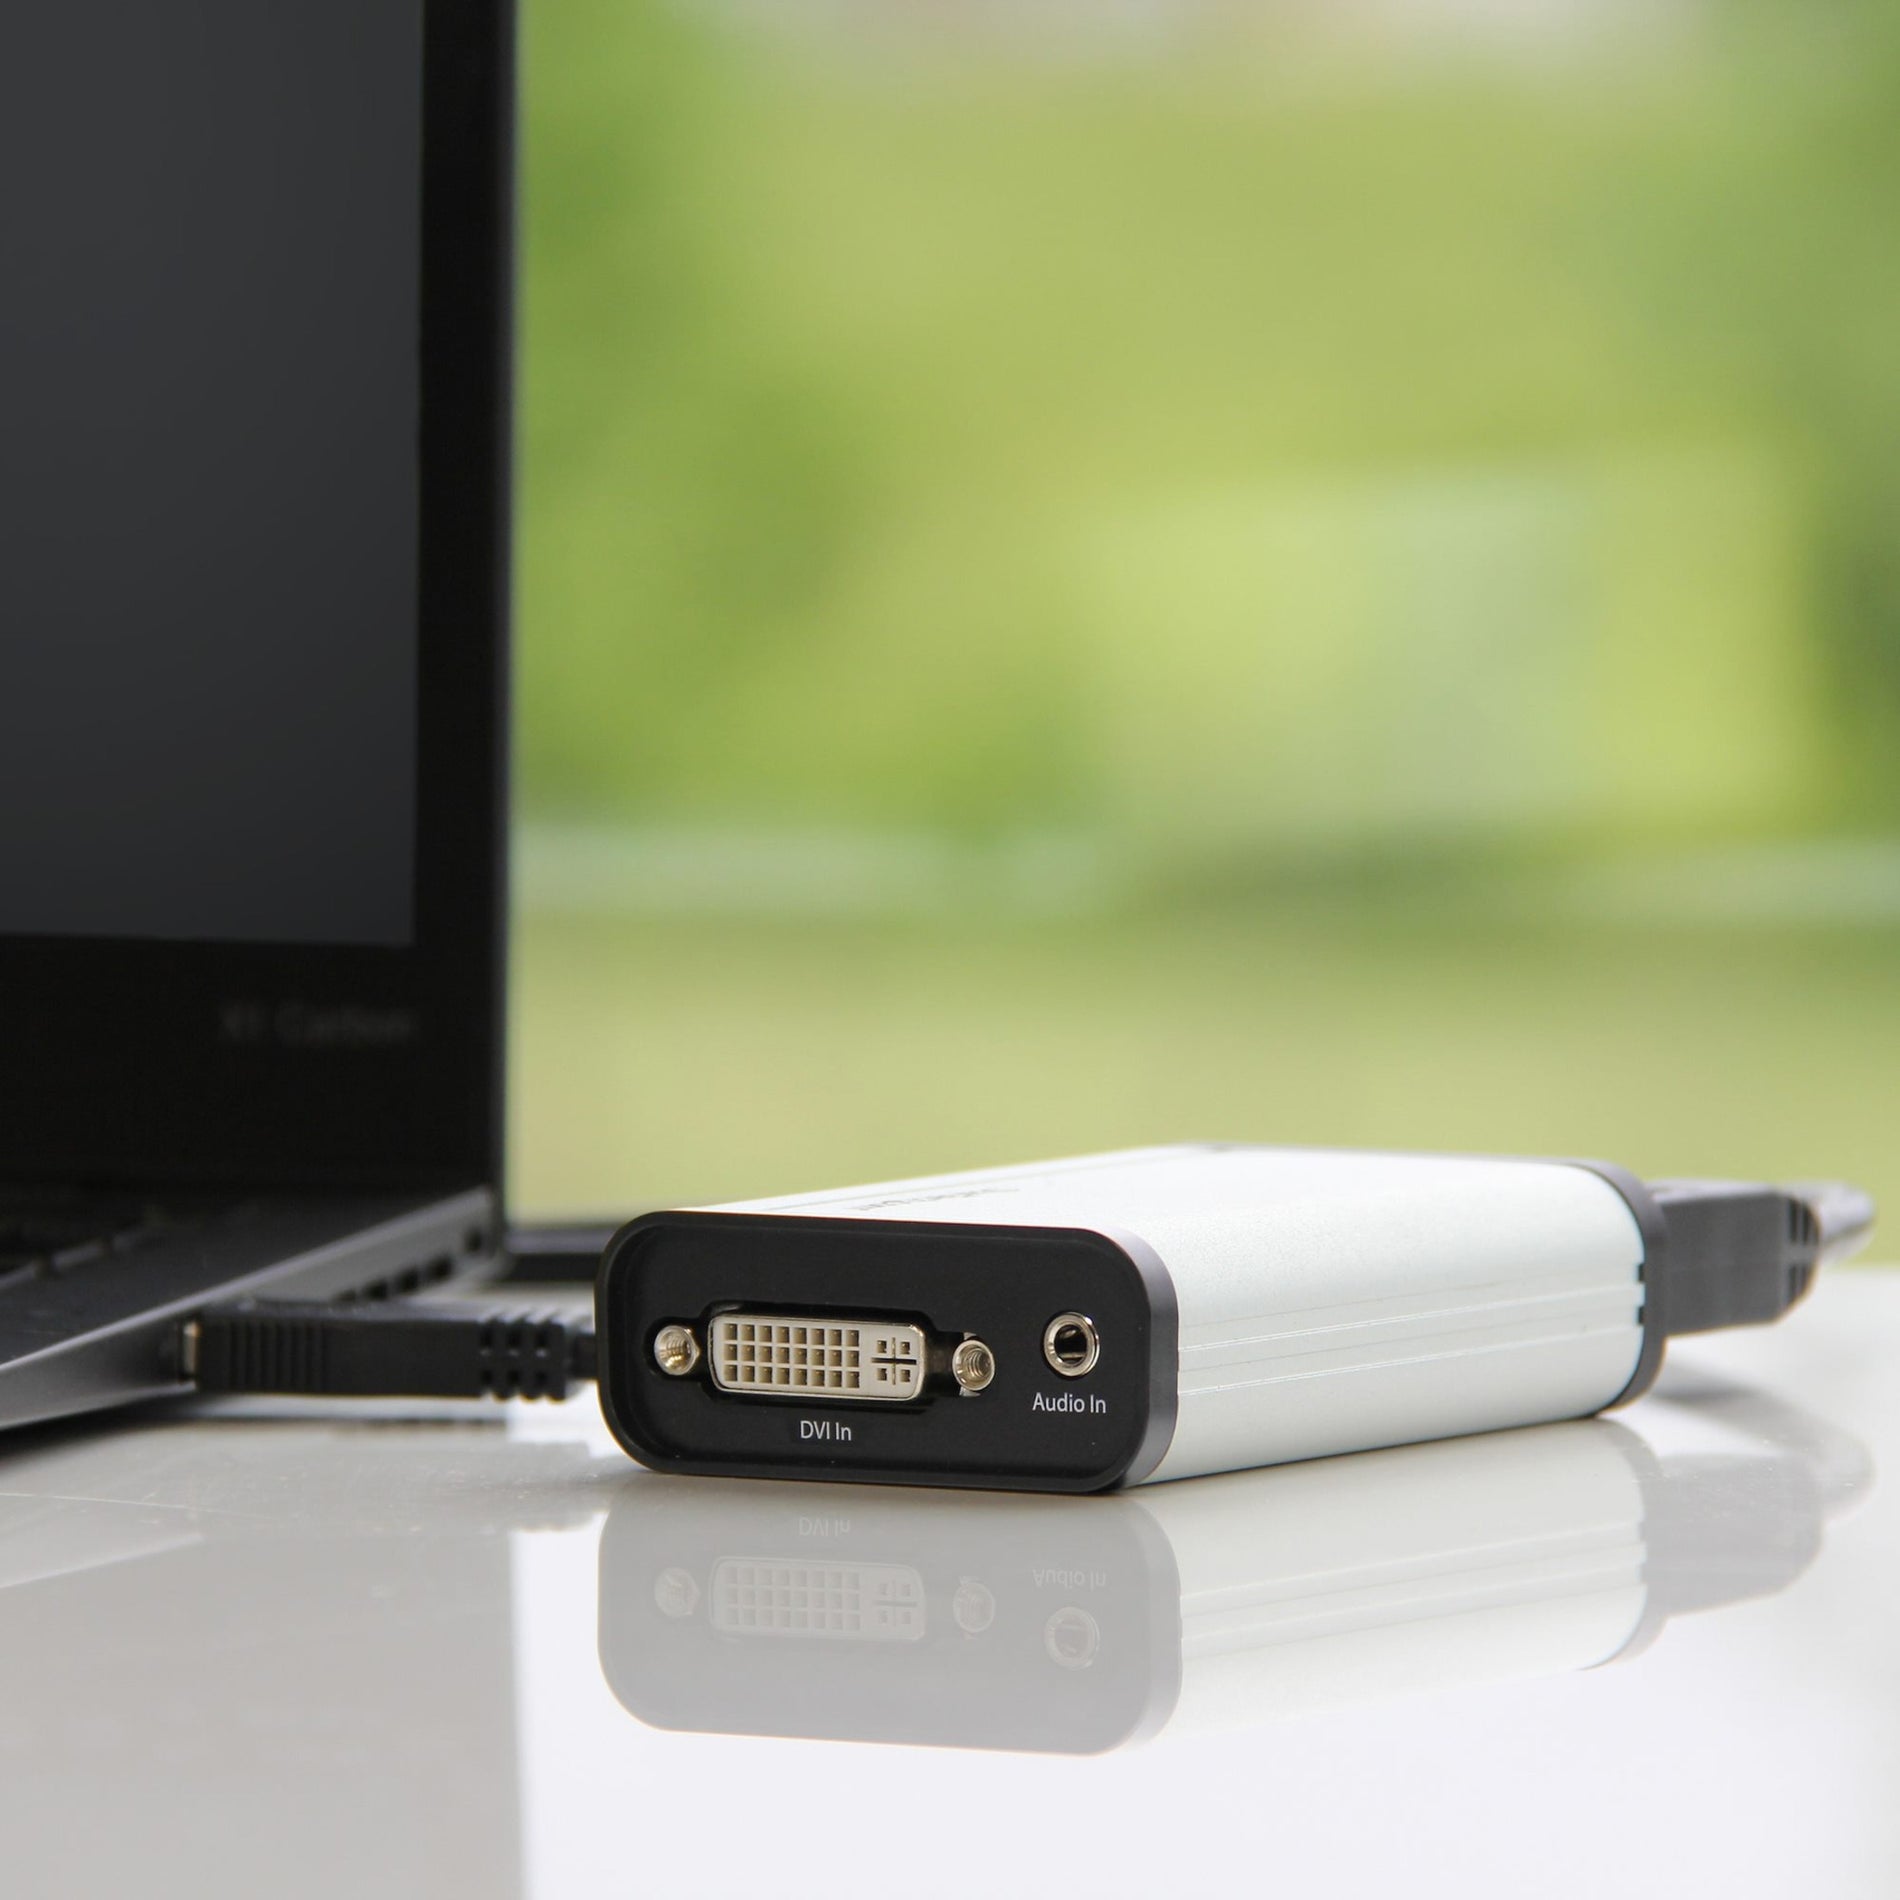 StarTech.com USB32DVCAPRO USB 3.0 Capture Device for High Performance DVI Video - 1080p 60fps - Aluminum, TAA Compliant [Discontinued]